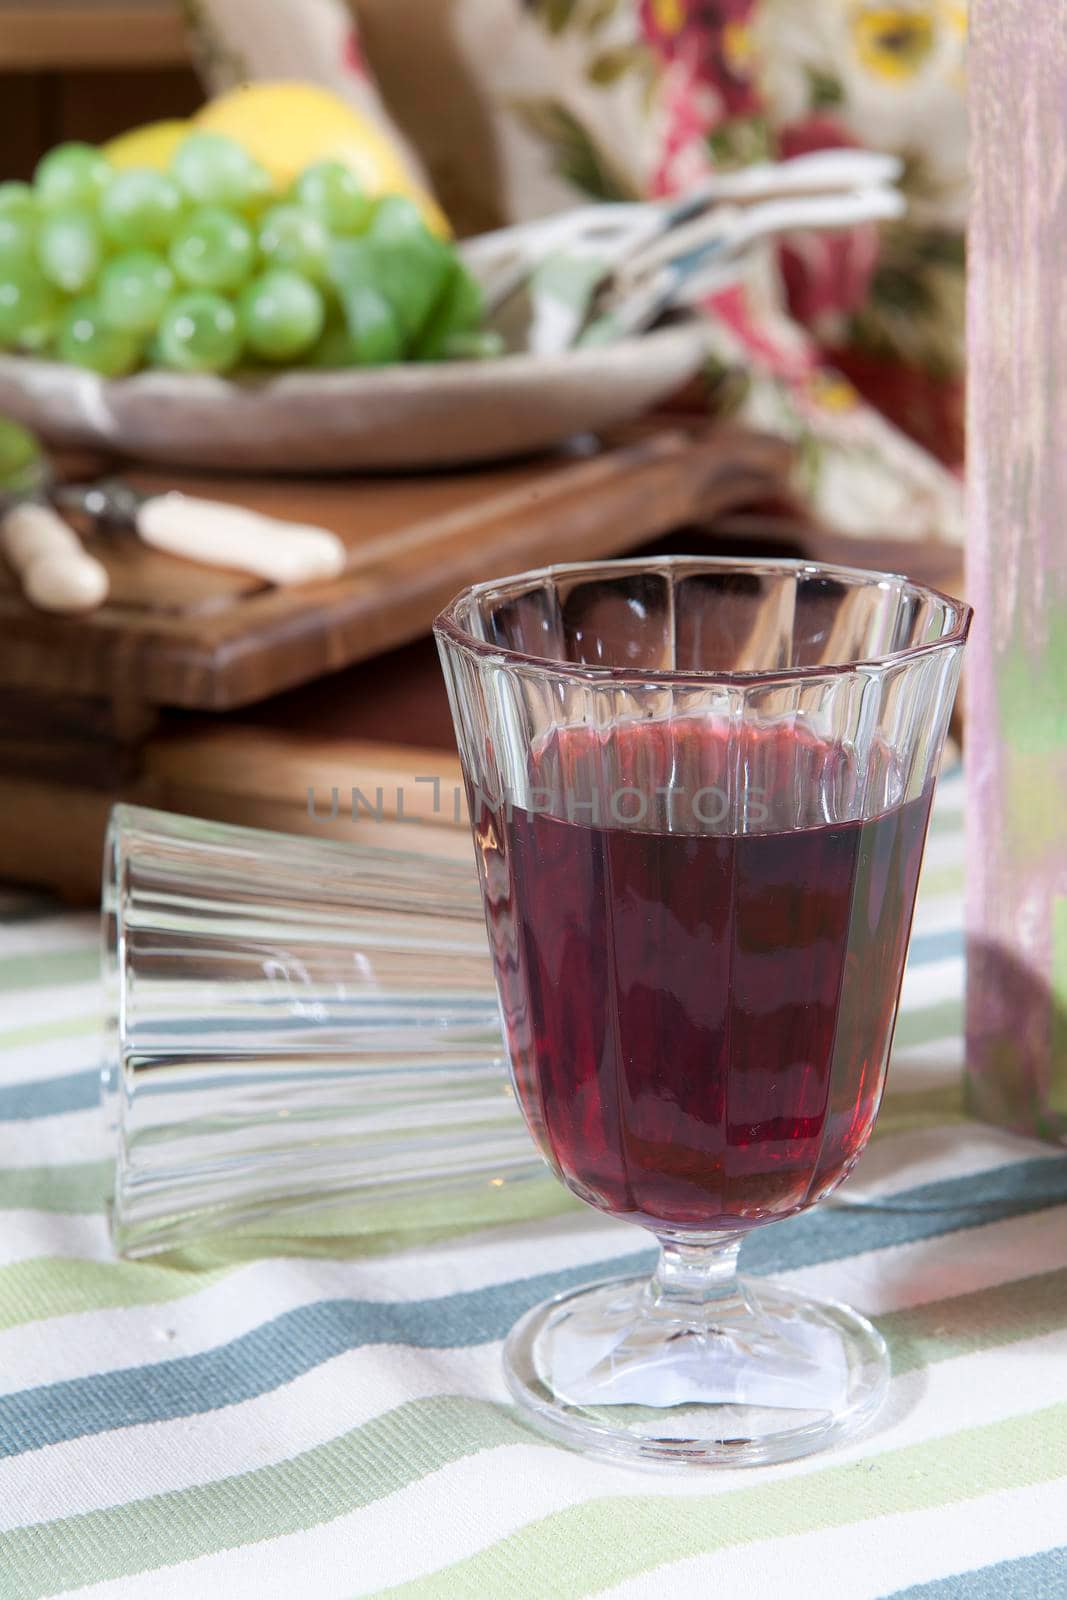 glass of red wine on the fascia table-cloth by elenarostunova